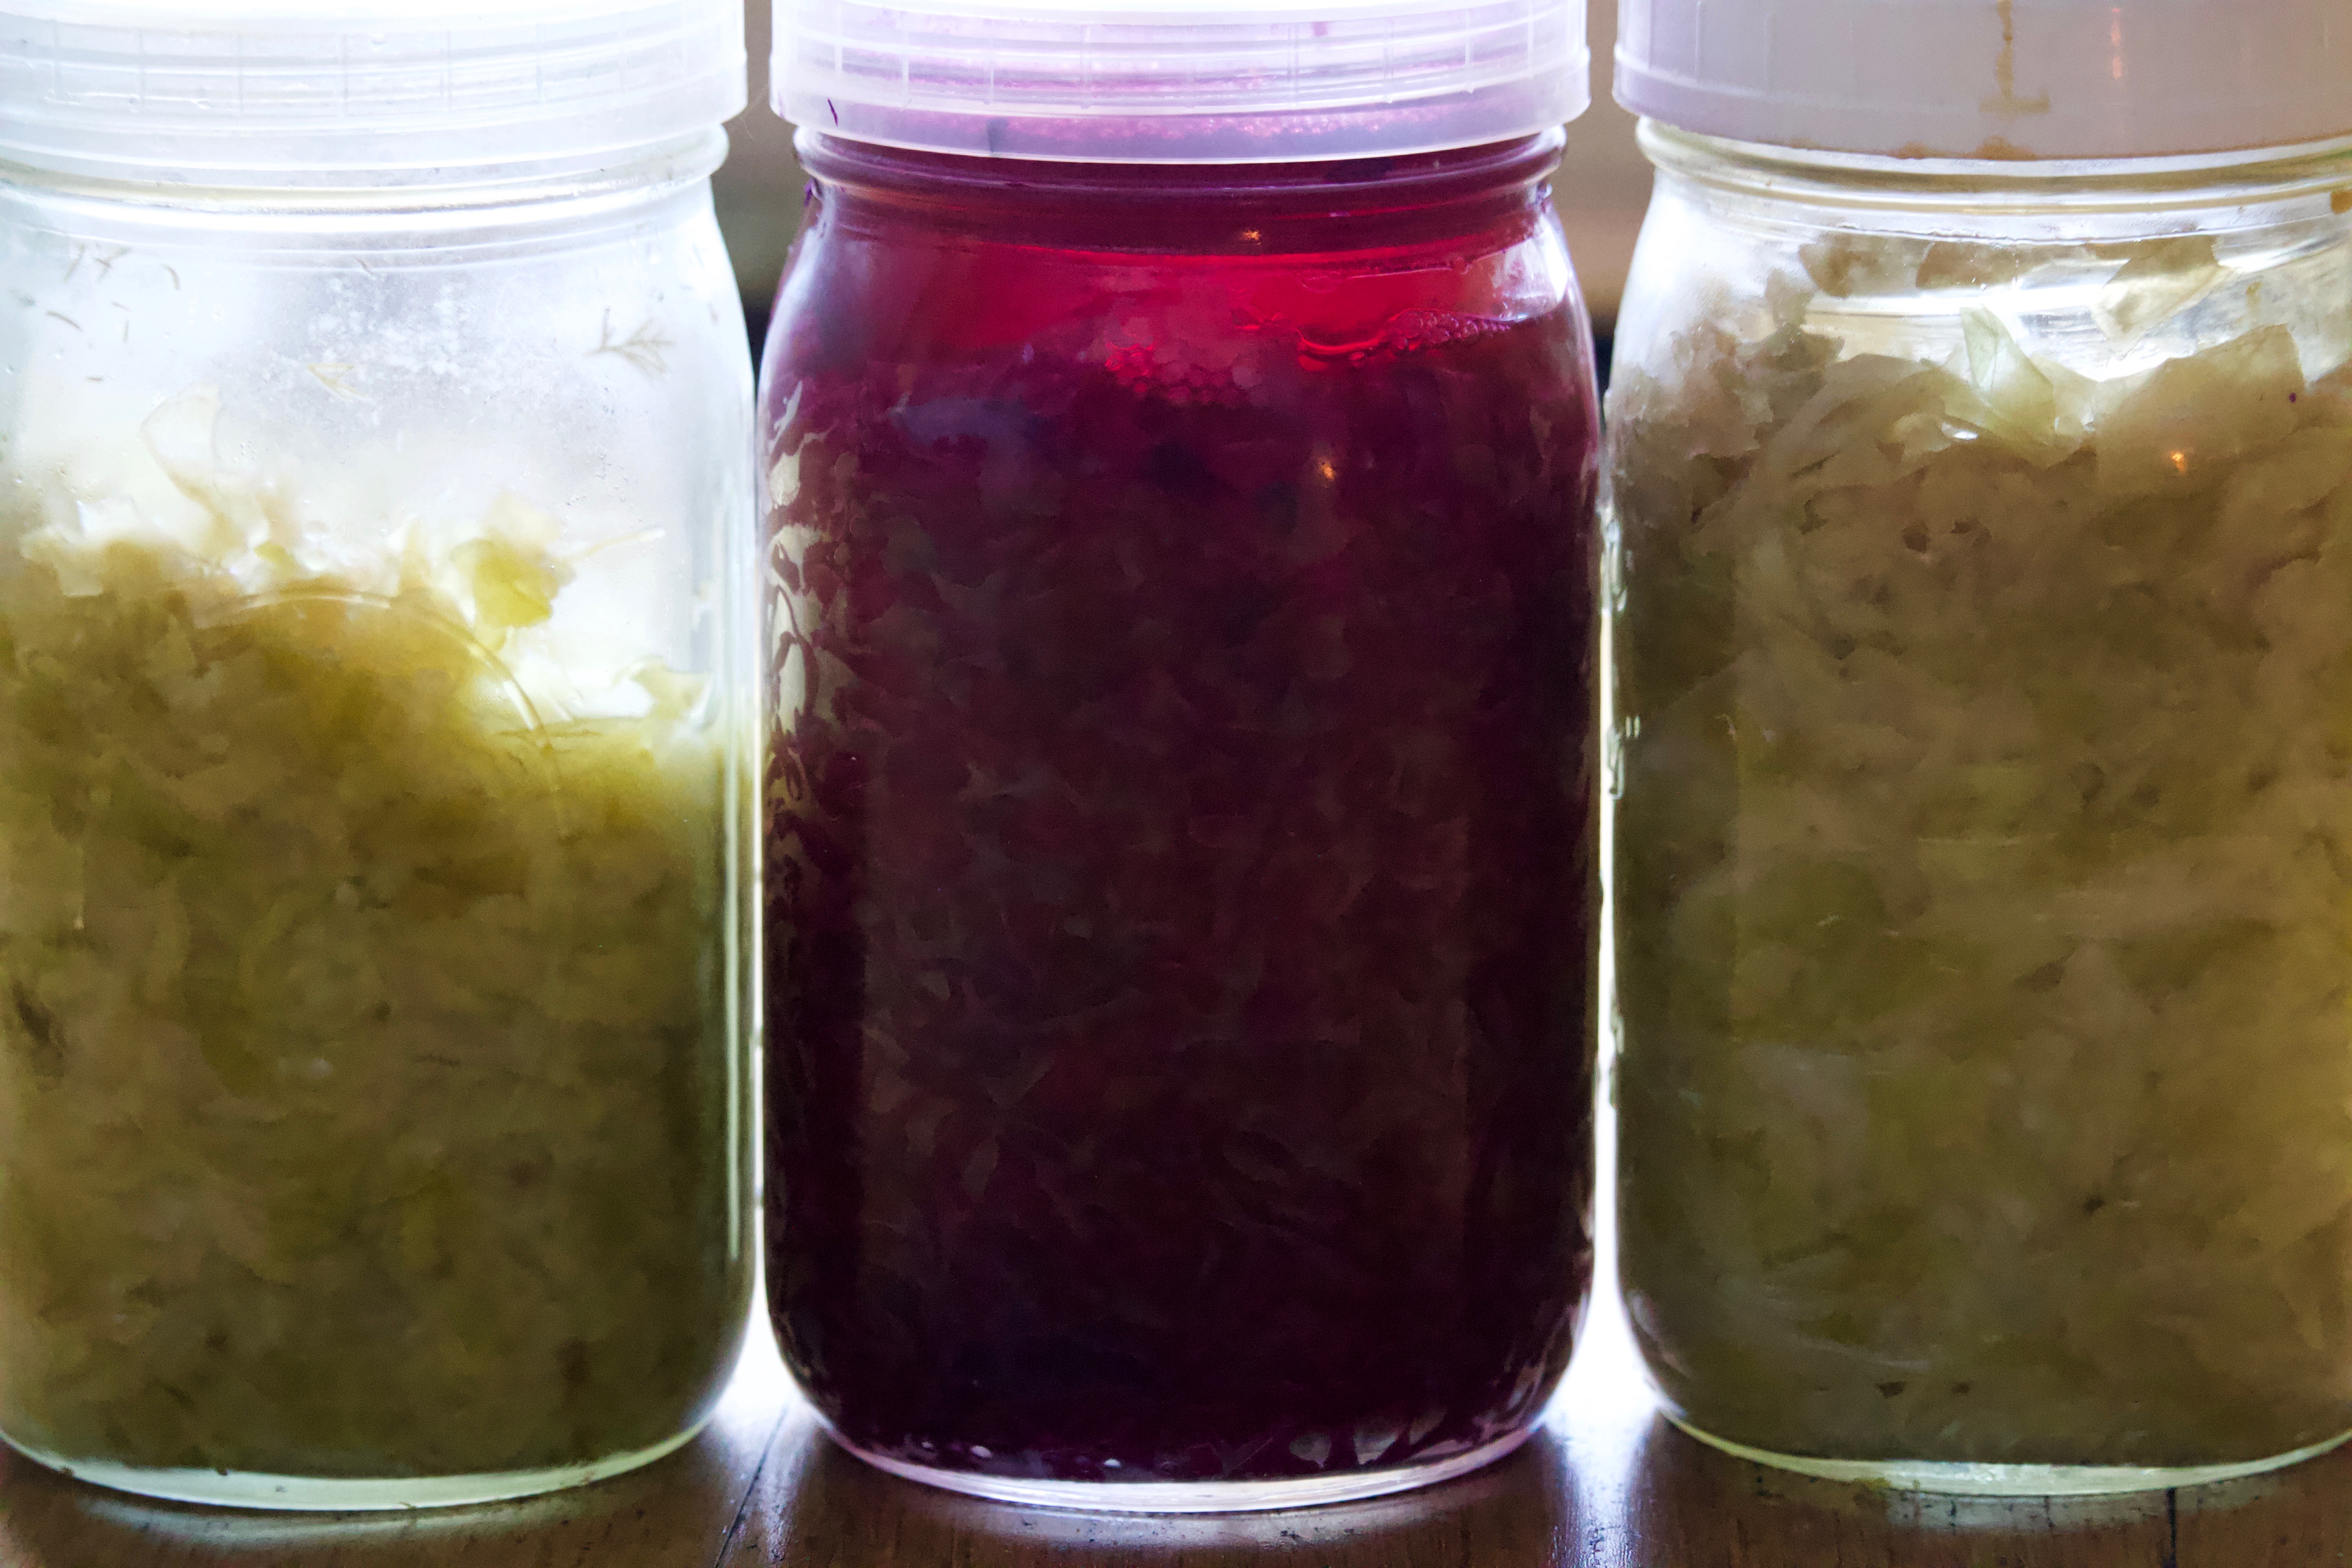 How to Make Your Own Sauerkraut